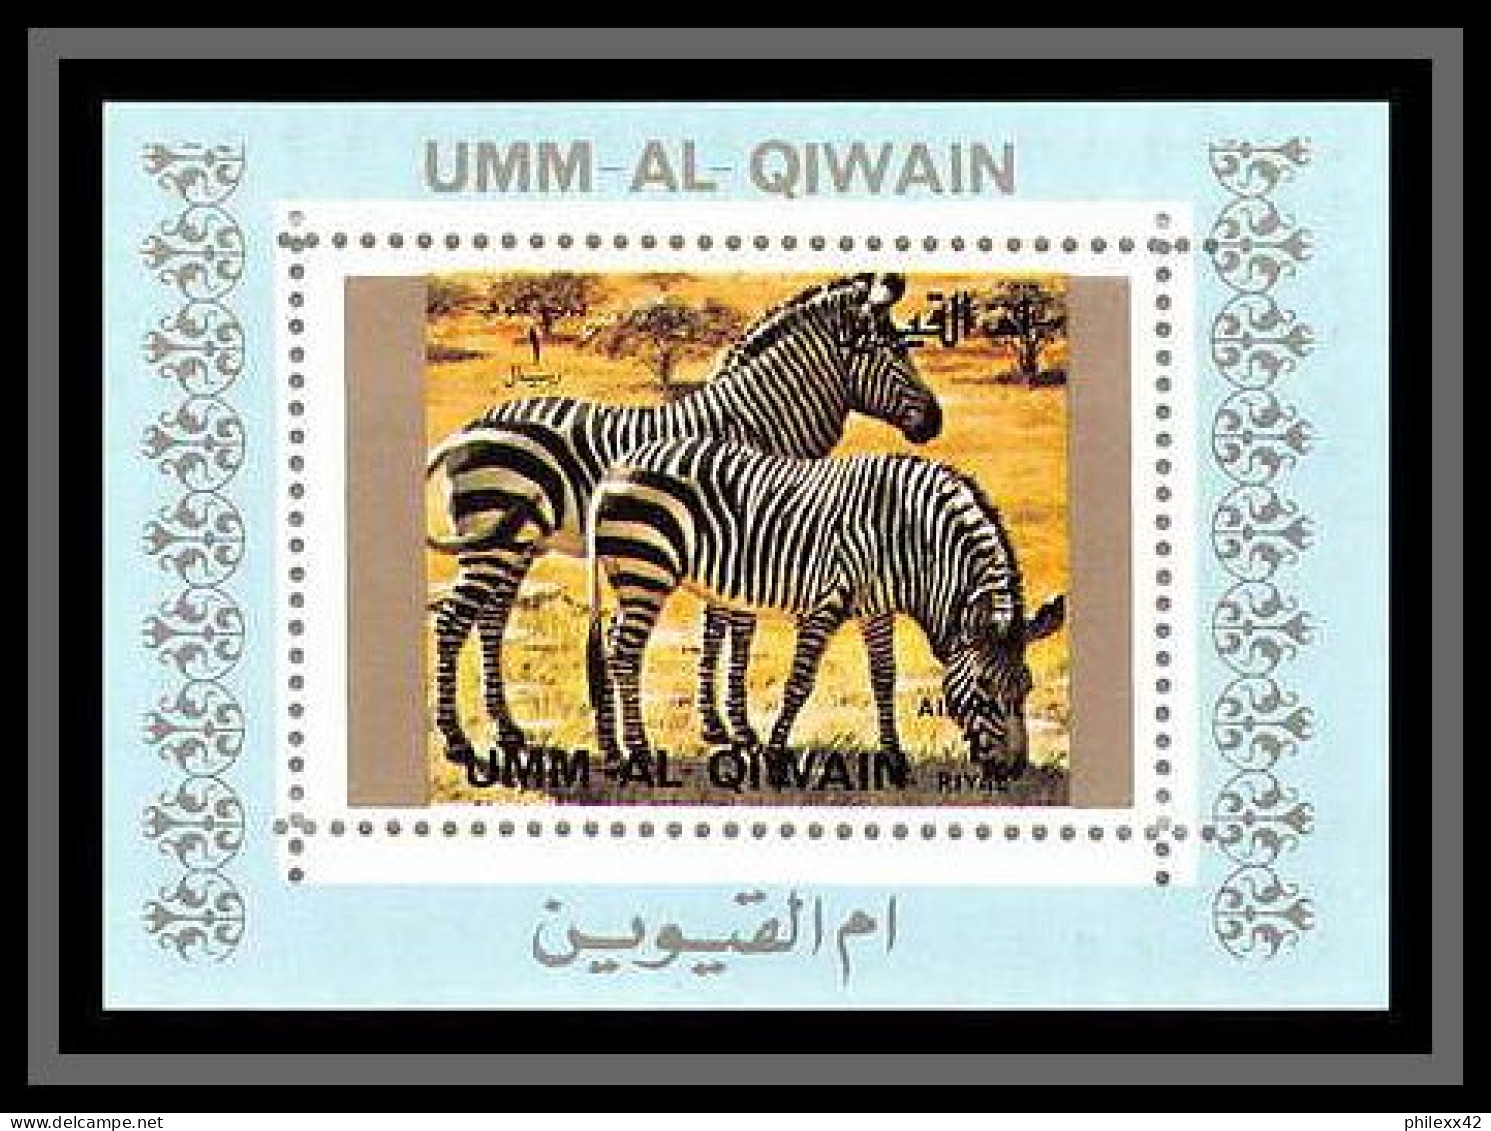 0049/ Umm al Qiwain deluxe blocs ** MNH michel N° 1370 / 1385 animaux - animals tirage bleu